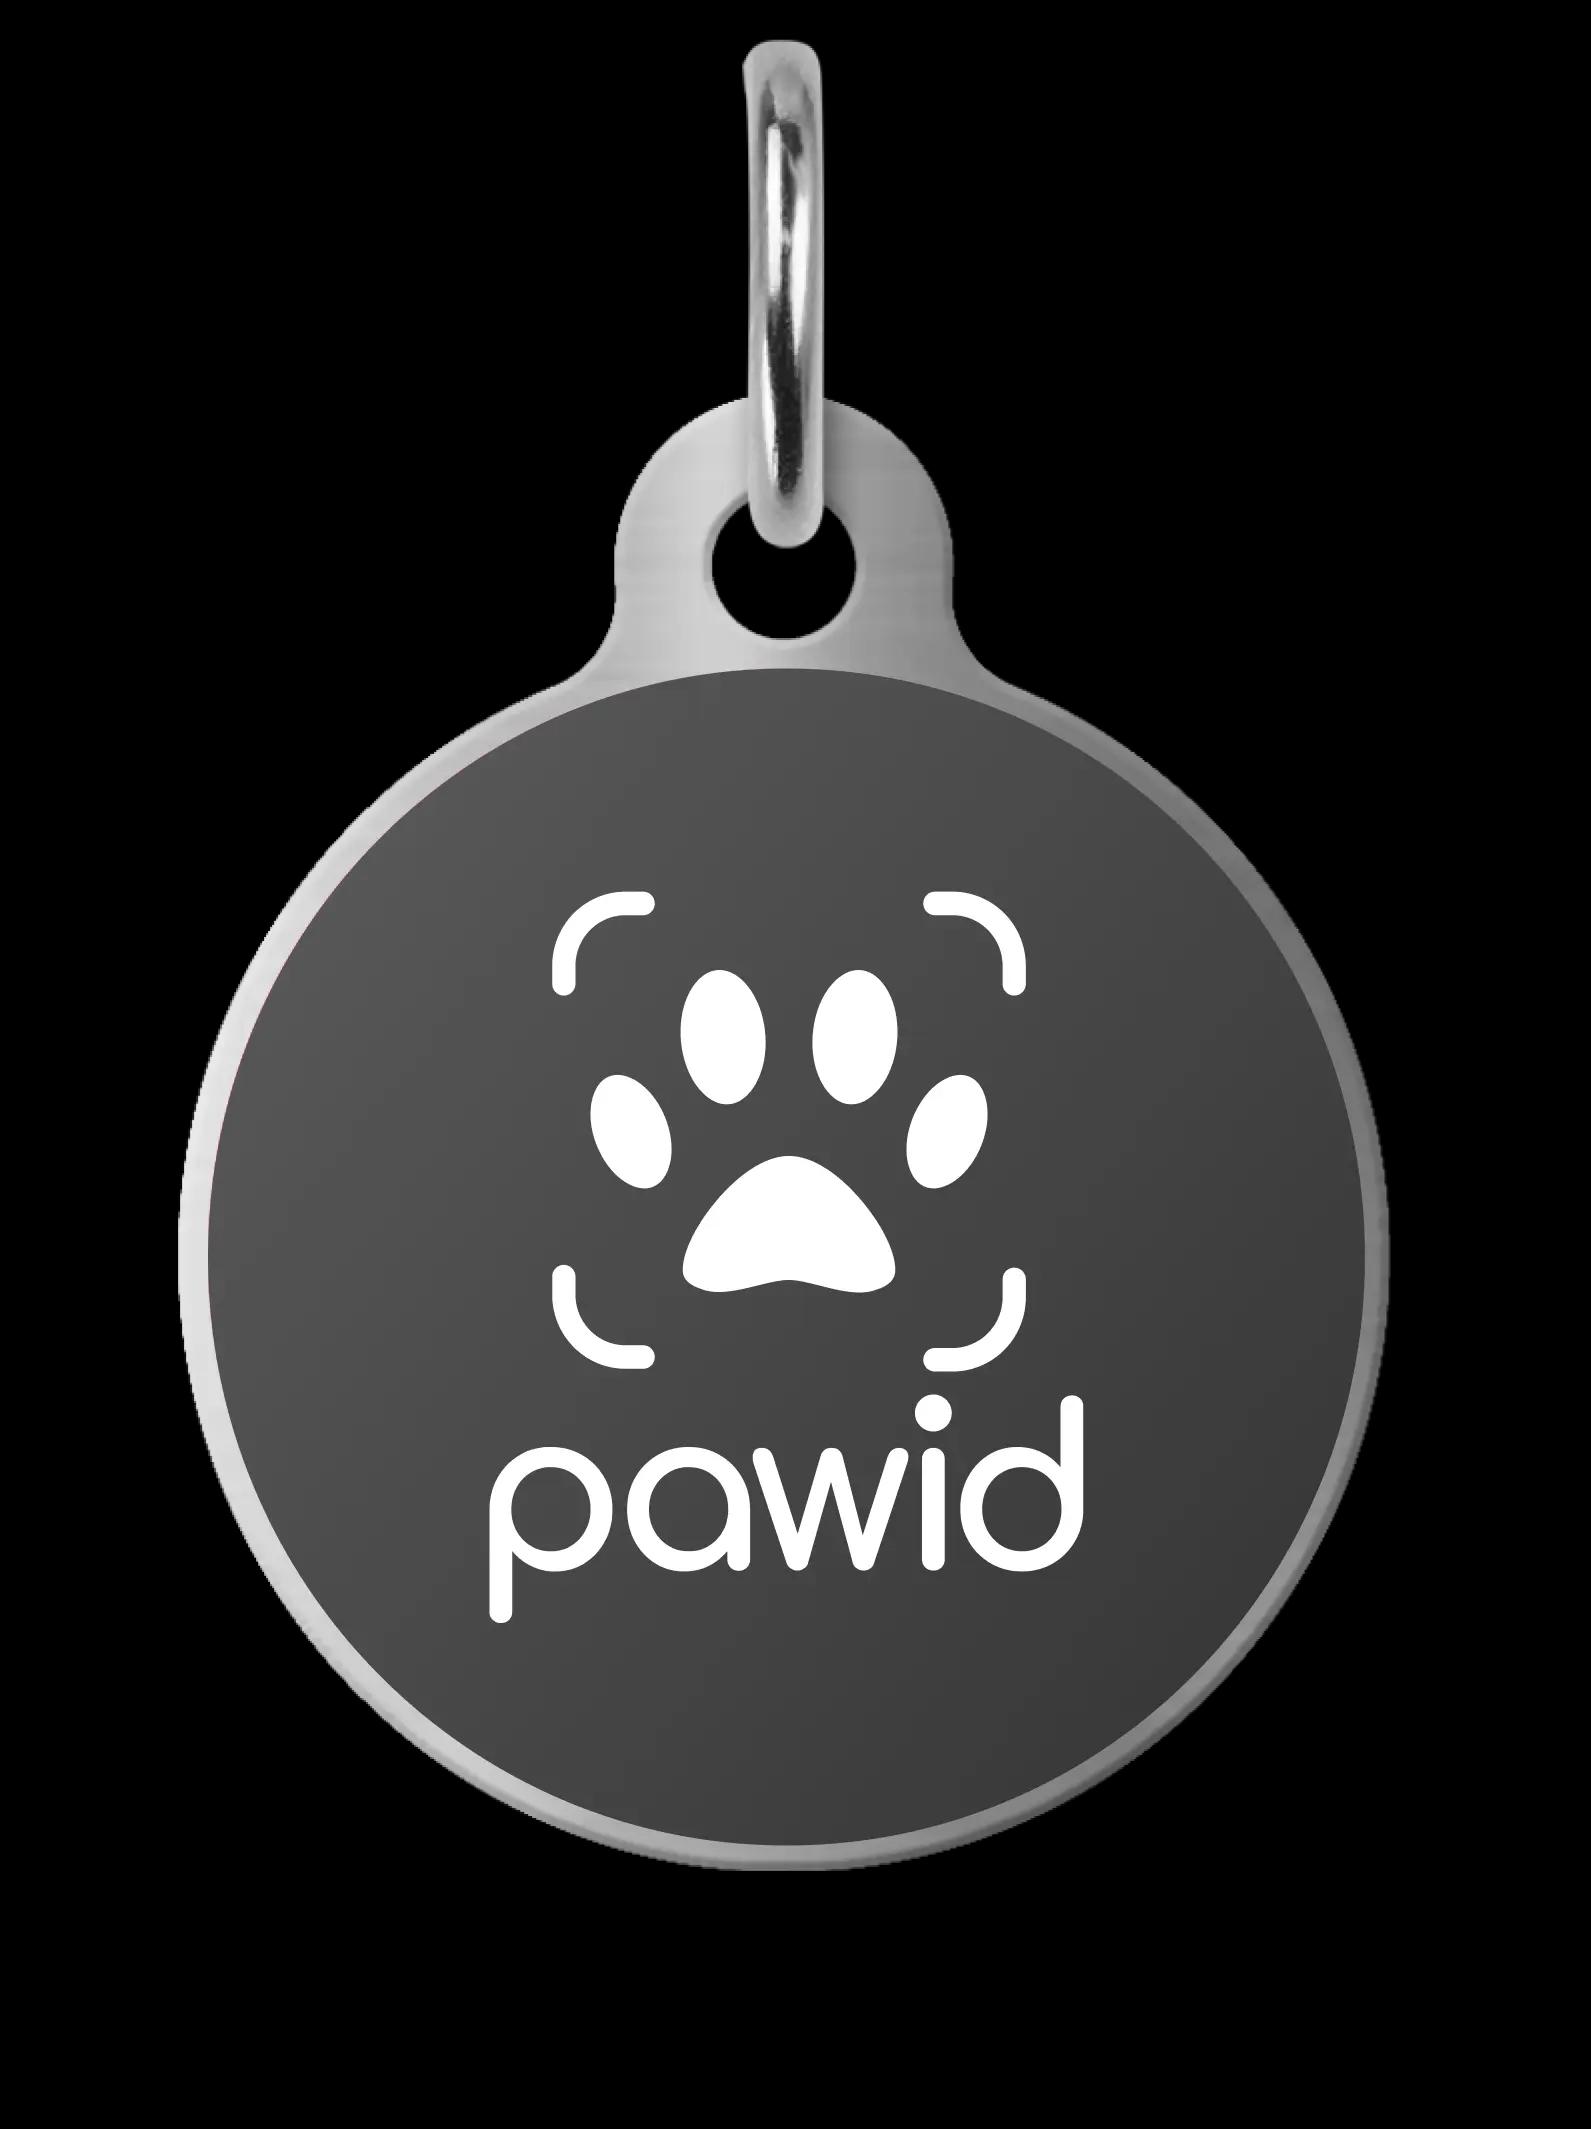 PAWID QR Code Dog Tag Black